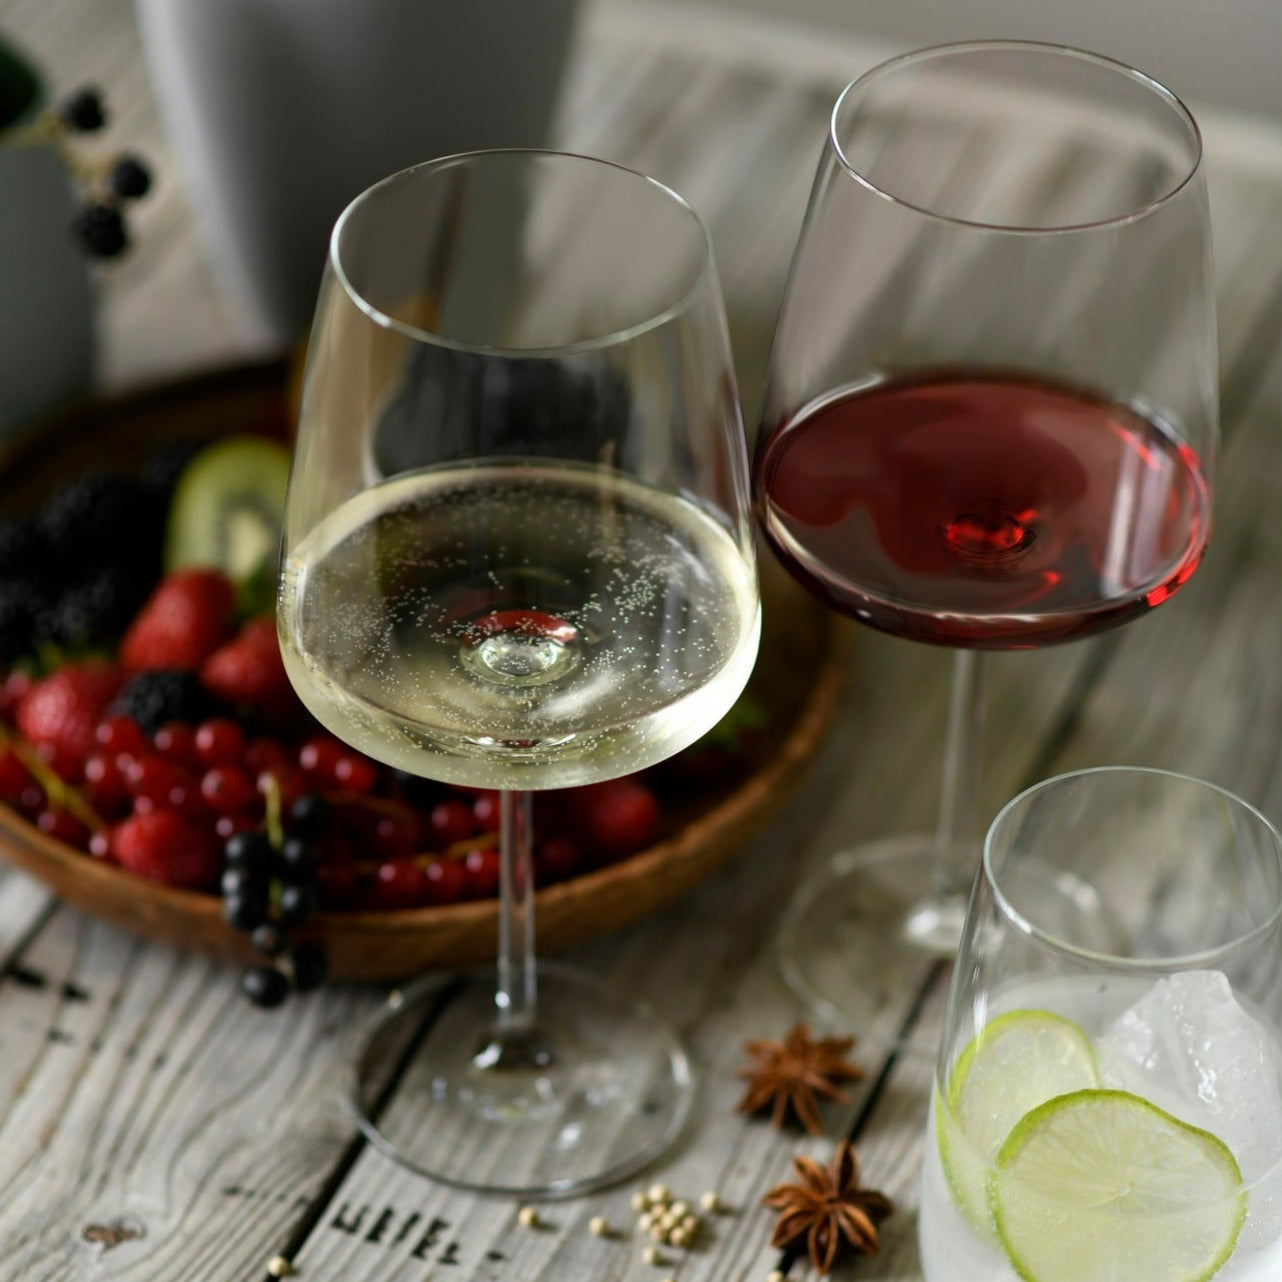 Sensa Light & Fresh Wine Glass, Set of 6